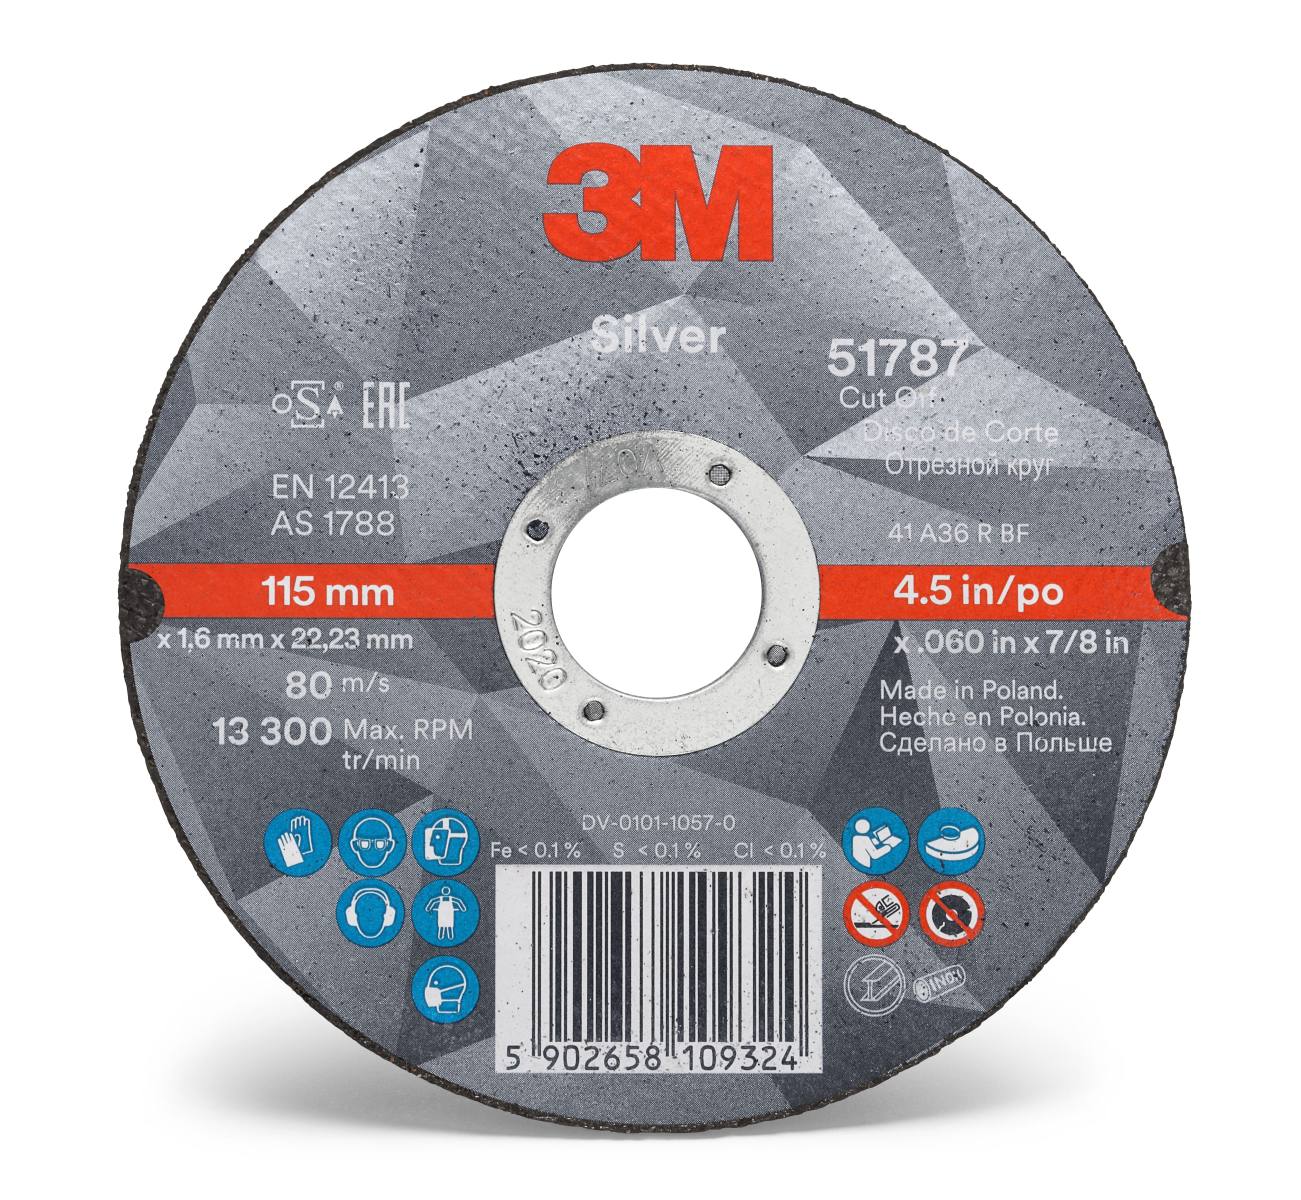 Disco da taglio 3M Silver Cut-Off, 75 mm, 1,0 mm, 10 mm, T41, 51767